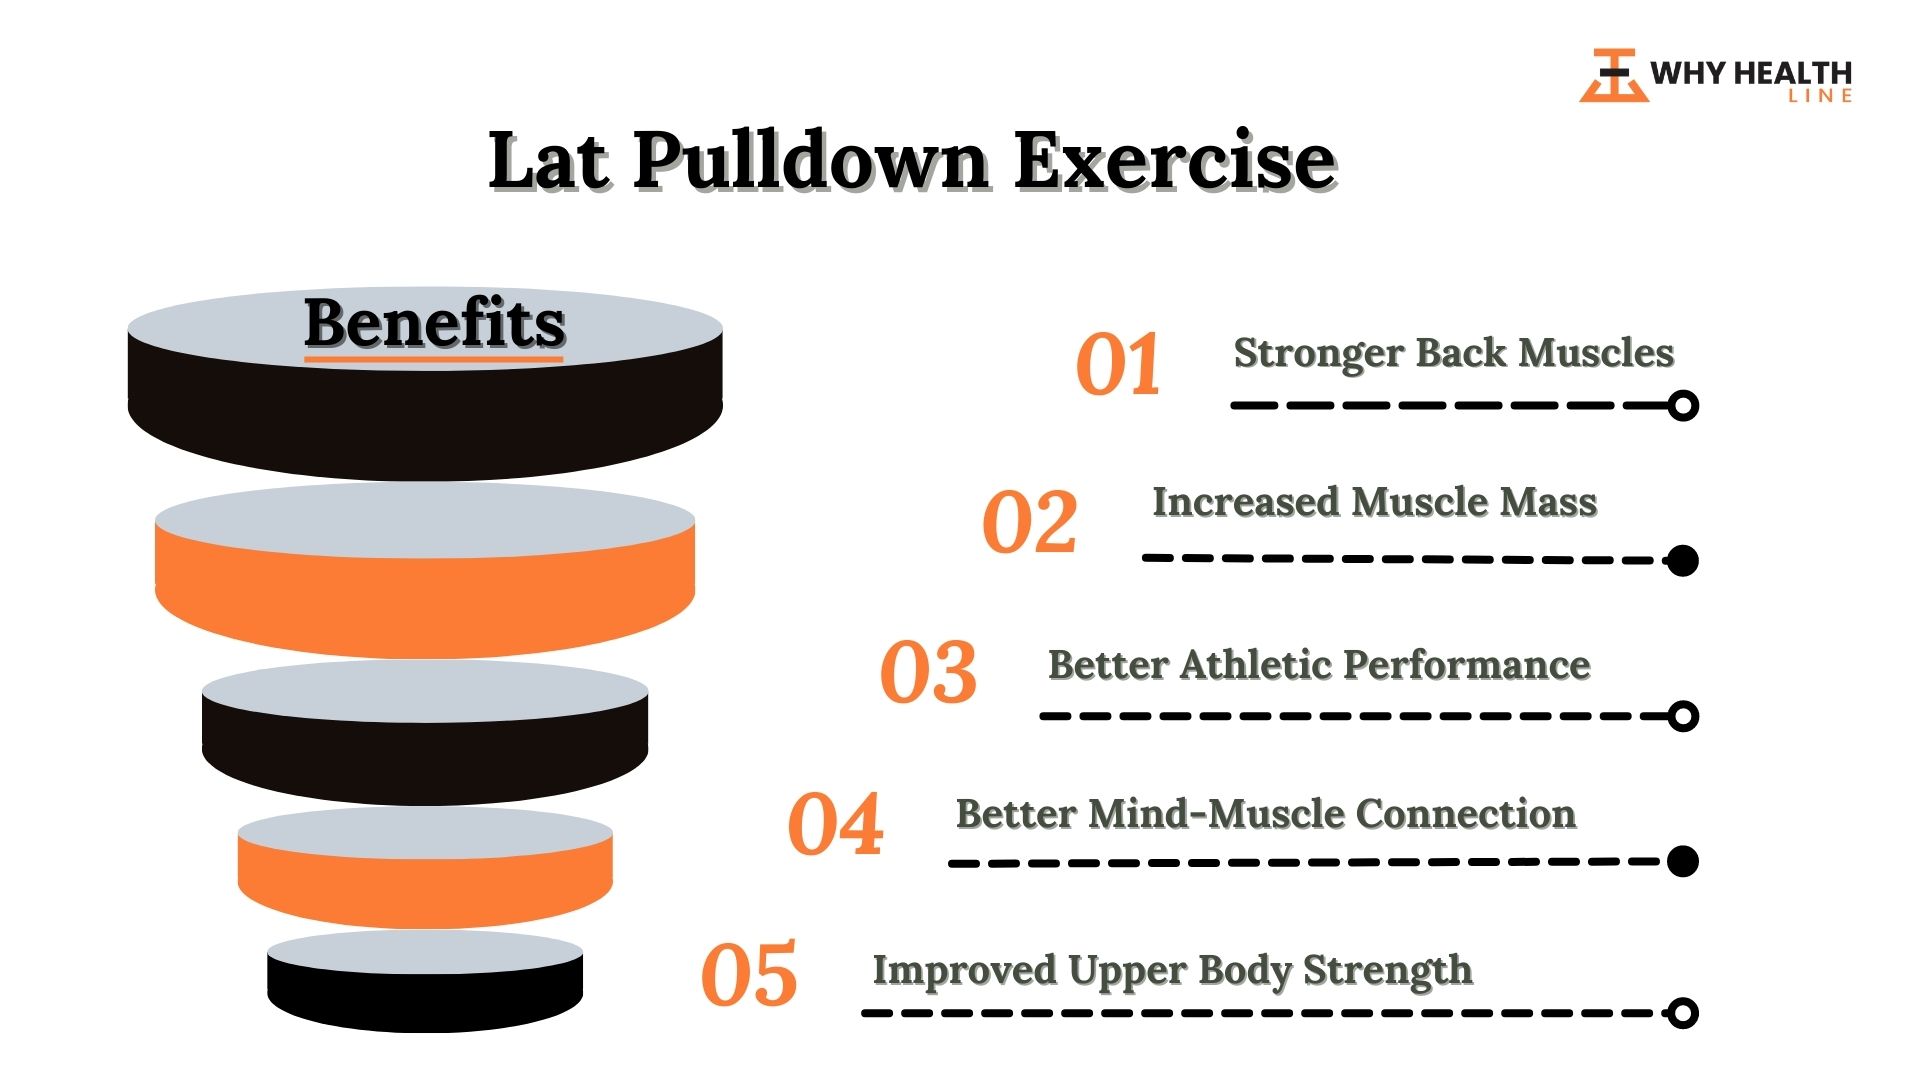 Lat Pulldown Exercise Benefits